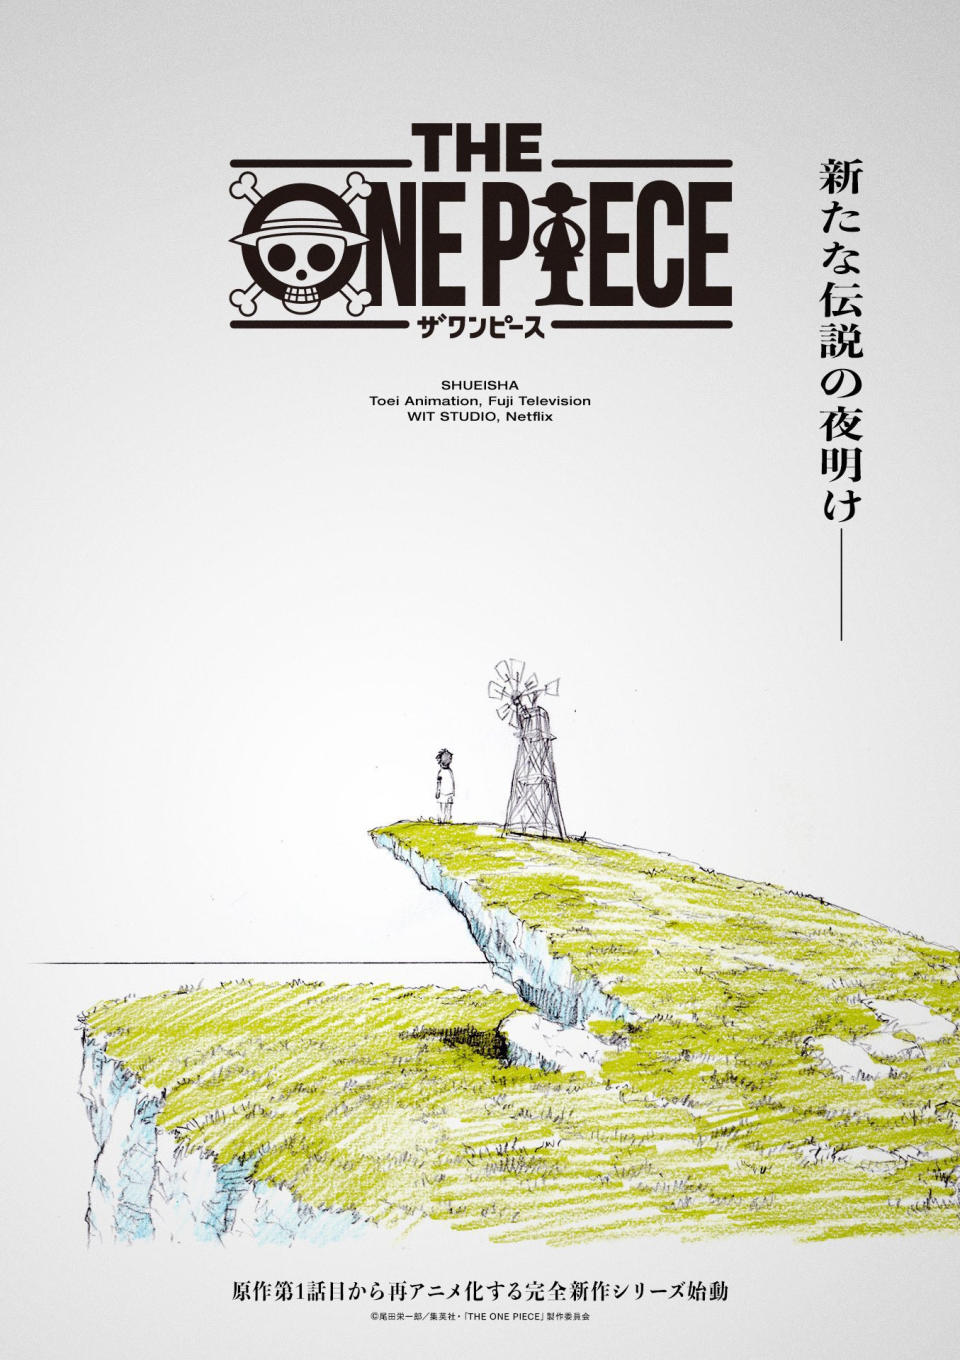 Primera imagen promocional de The One Piece